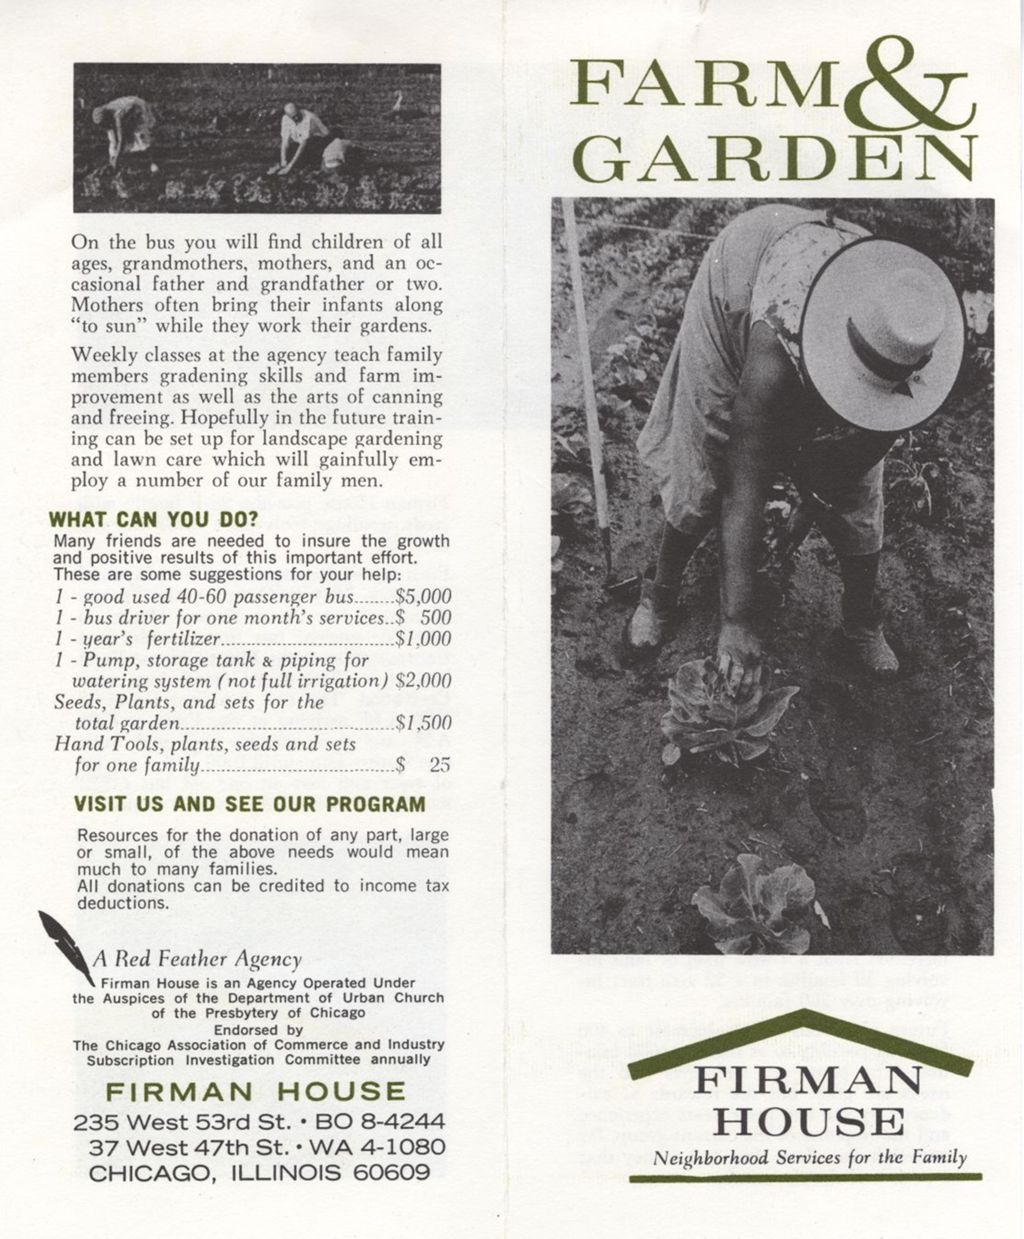 Firman House Farm & Garden brochure